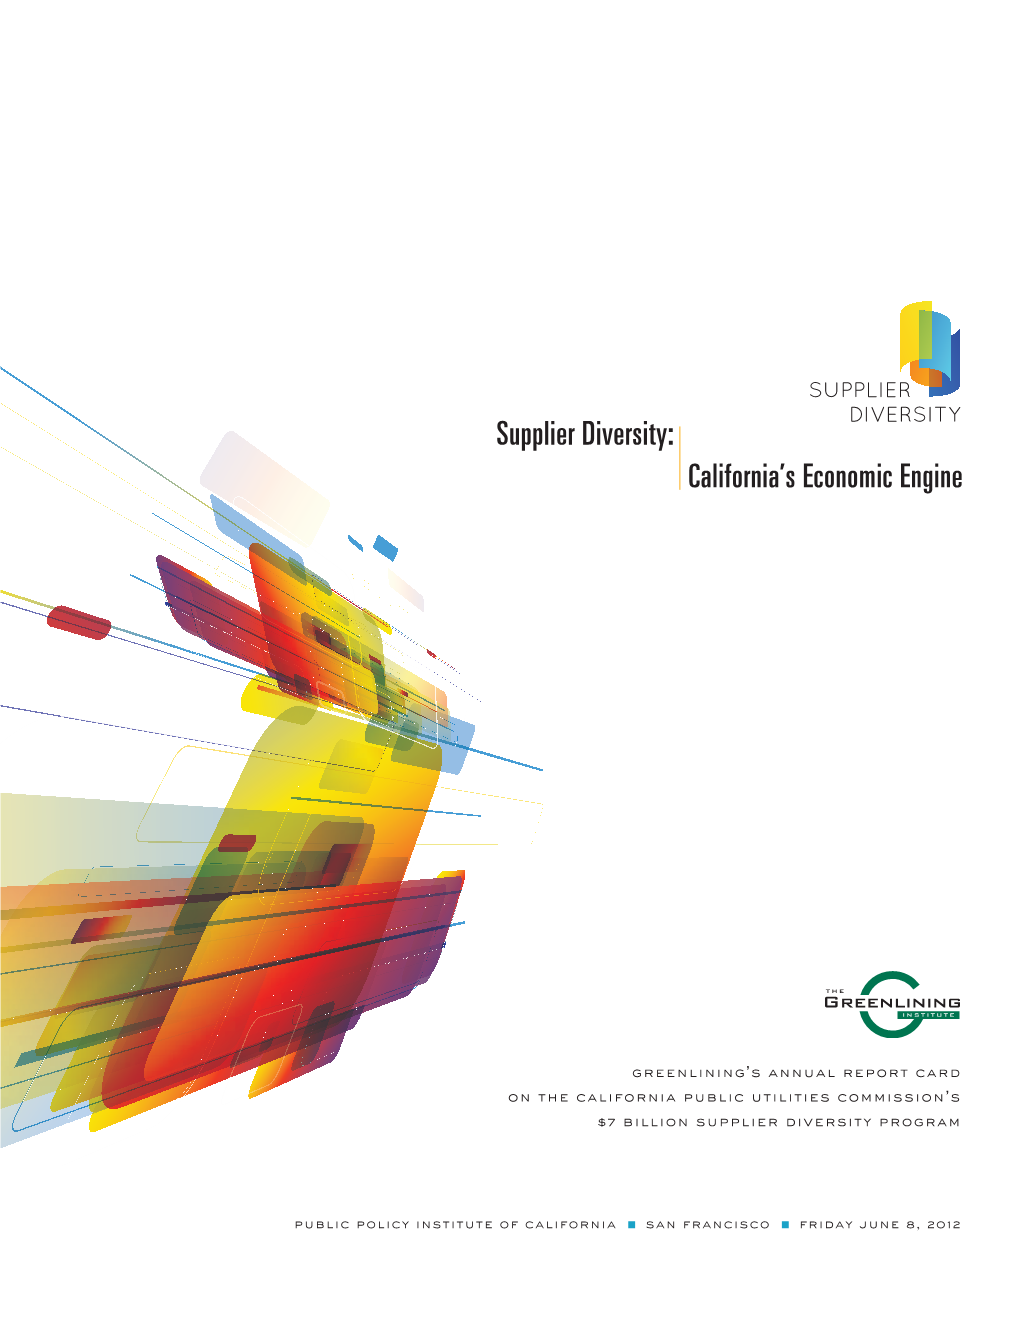 Supplier Diversity: California's Economic Engine